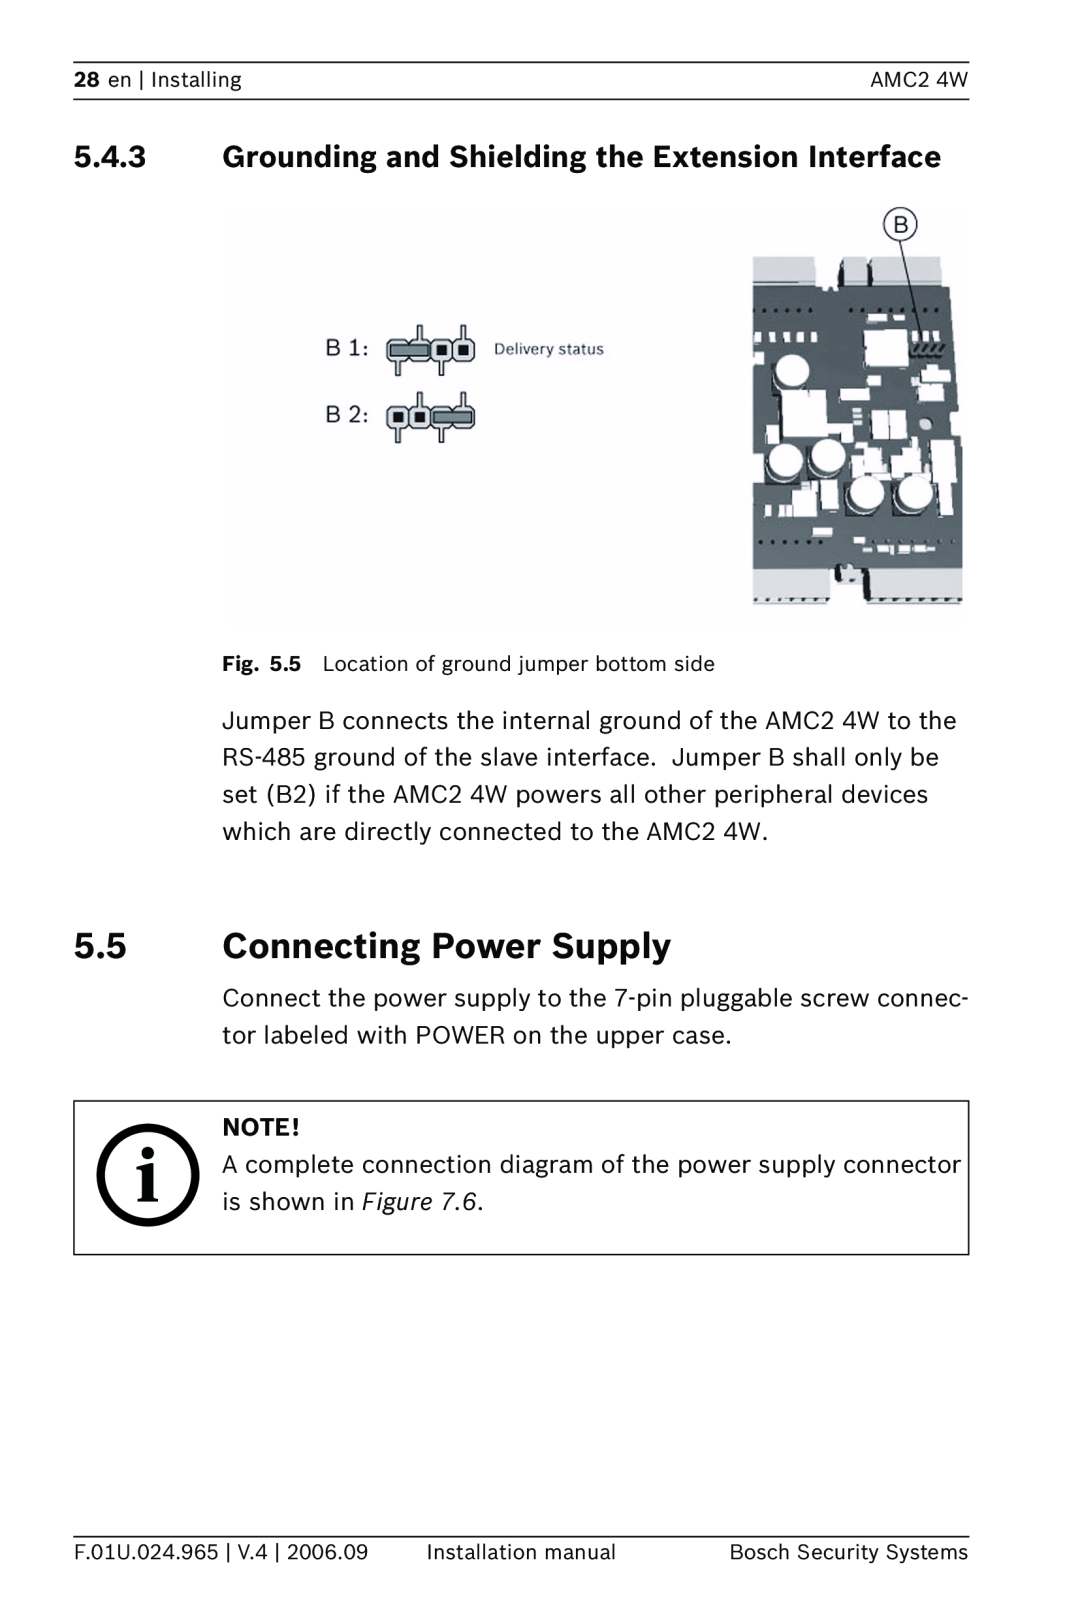 Bosch Appliances APC-AMC2-4WCF 5.5Connecting Power Supply, en Installing, AMC2 4W, 5 Location of ground jumper bottom side 